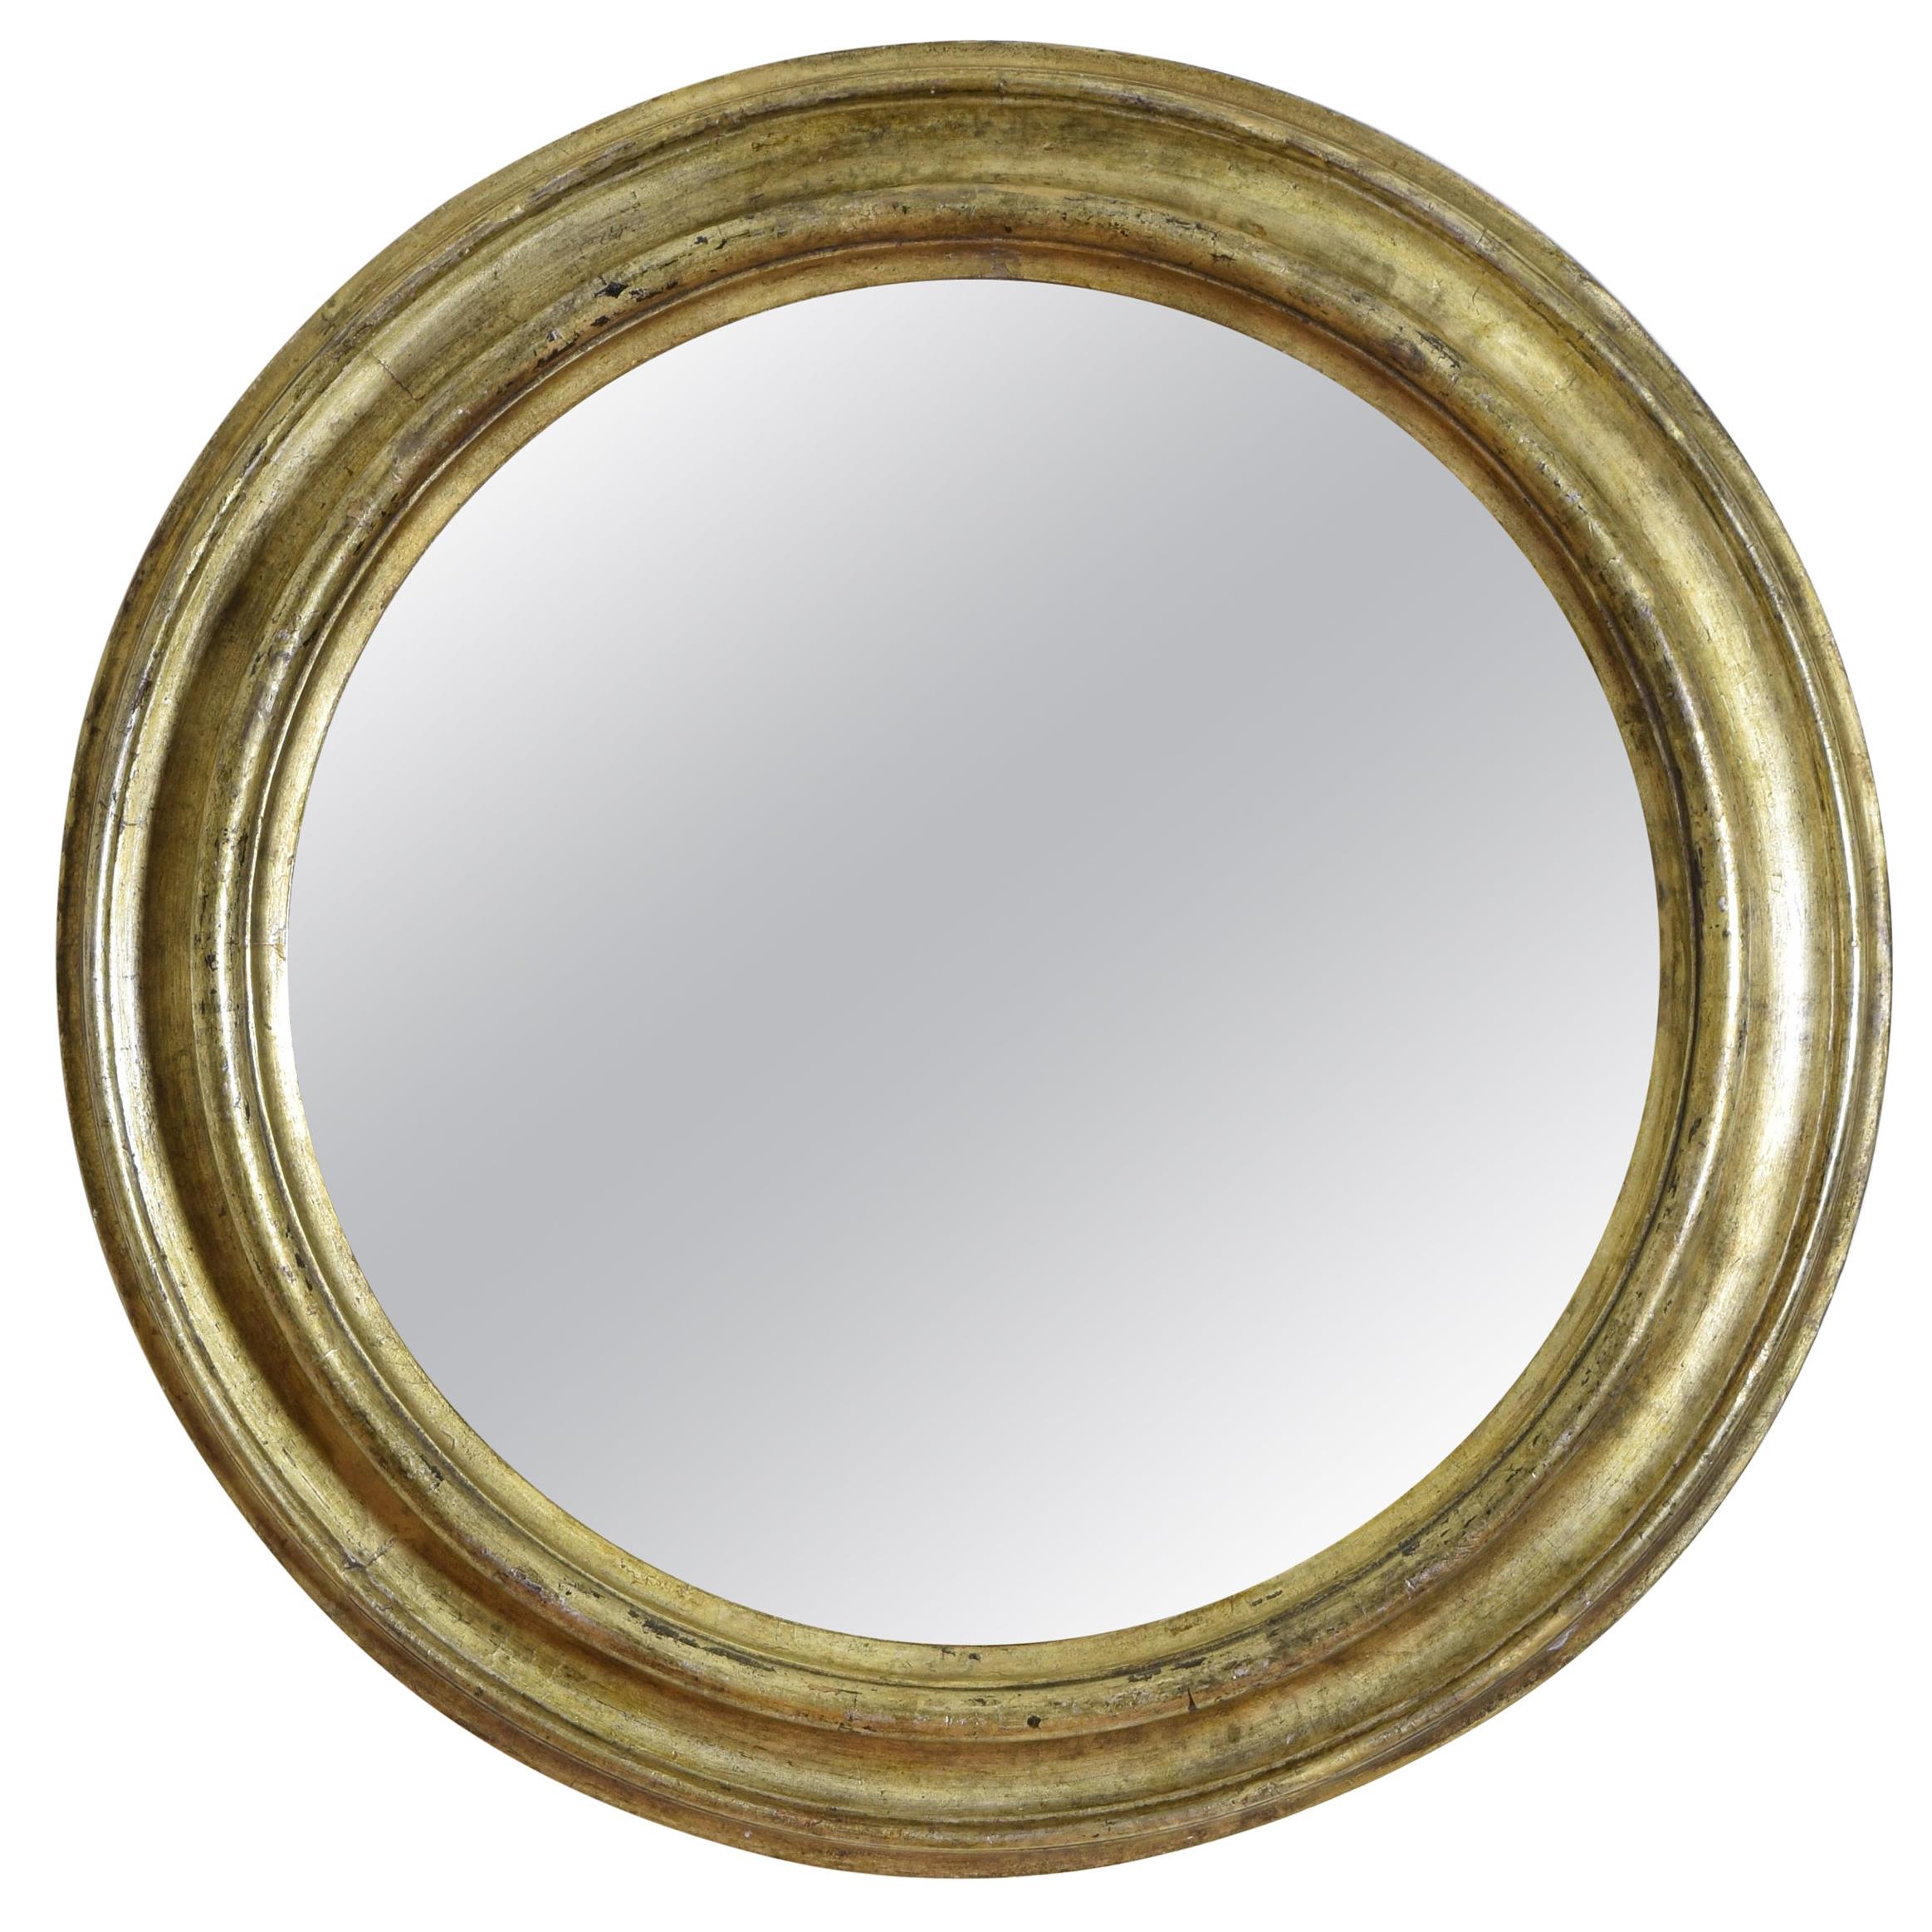 Italian Round Giltwood Mirror, Early 18th Century